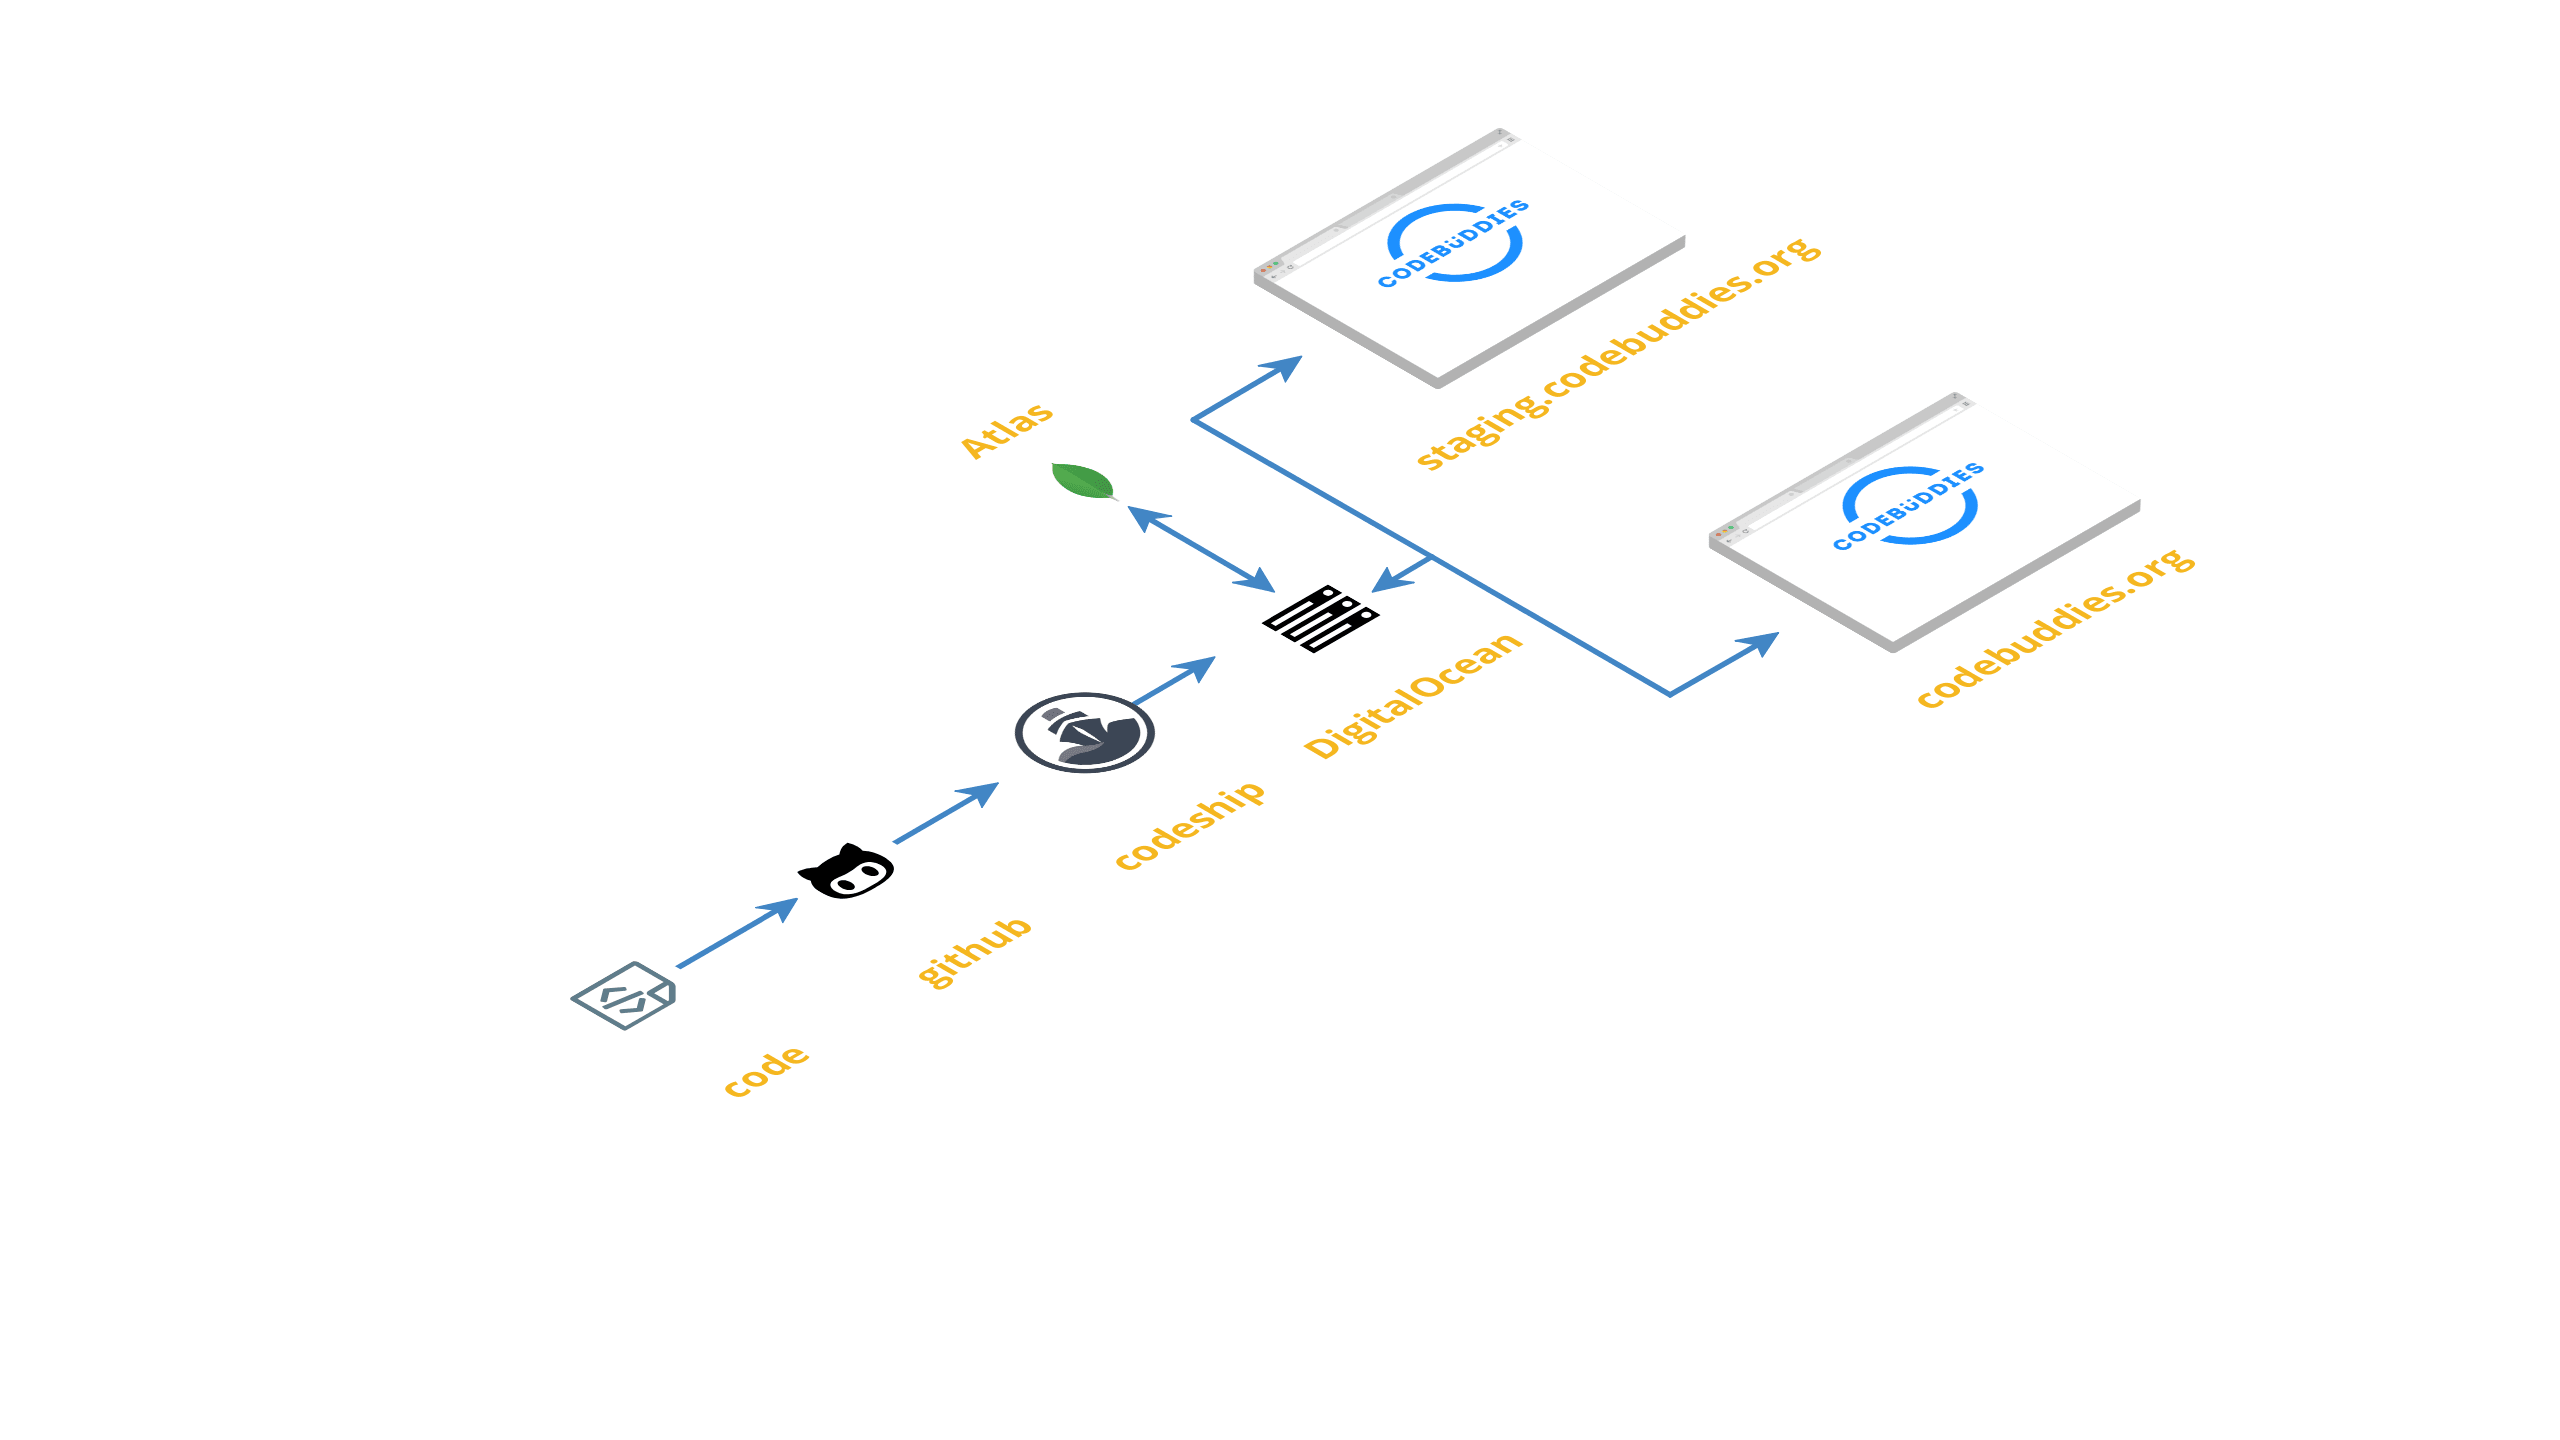 cb_deployment_workflow_diagram.png